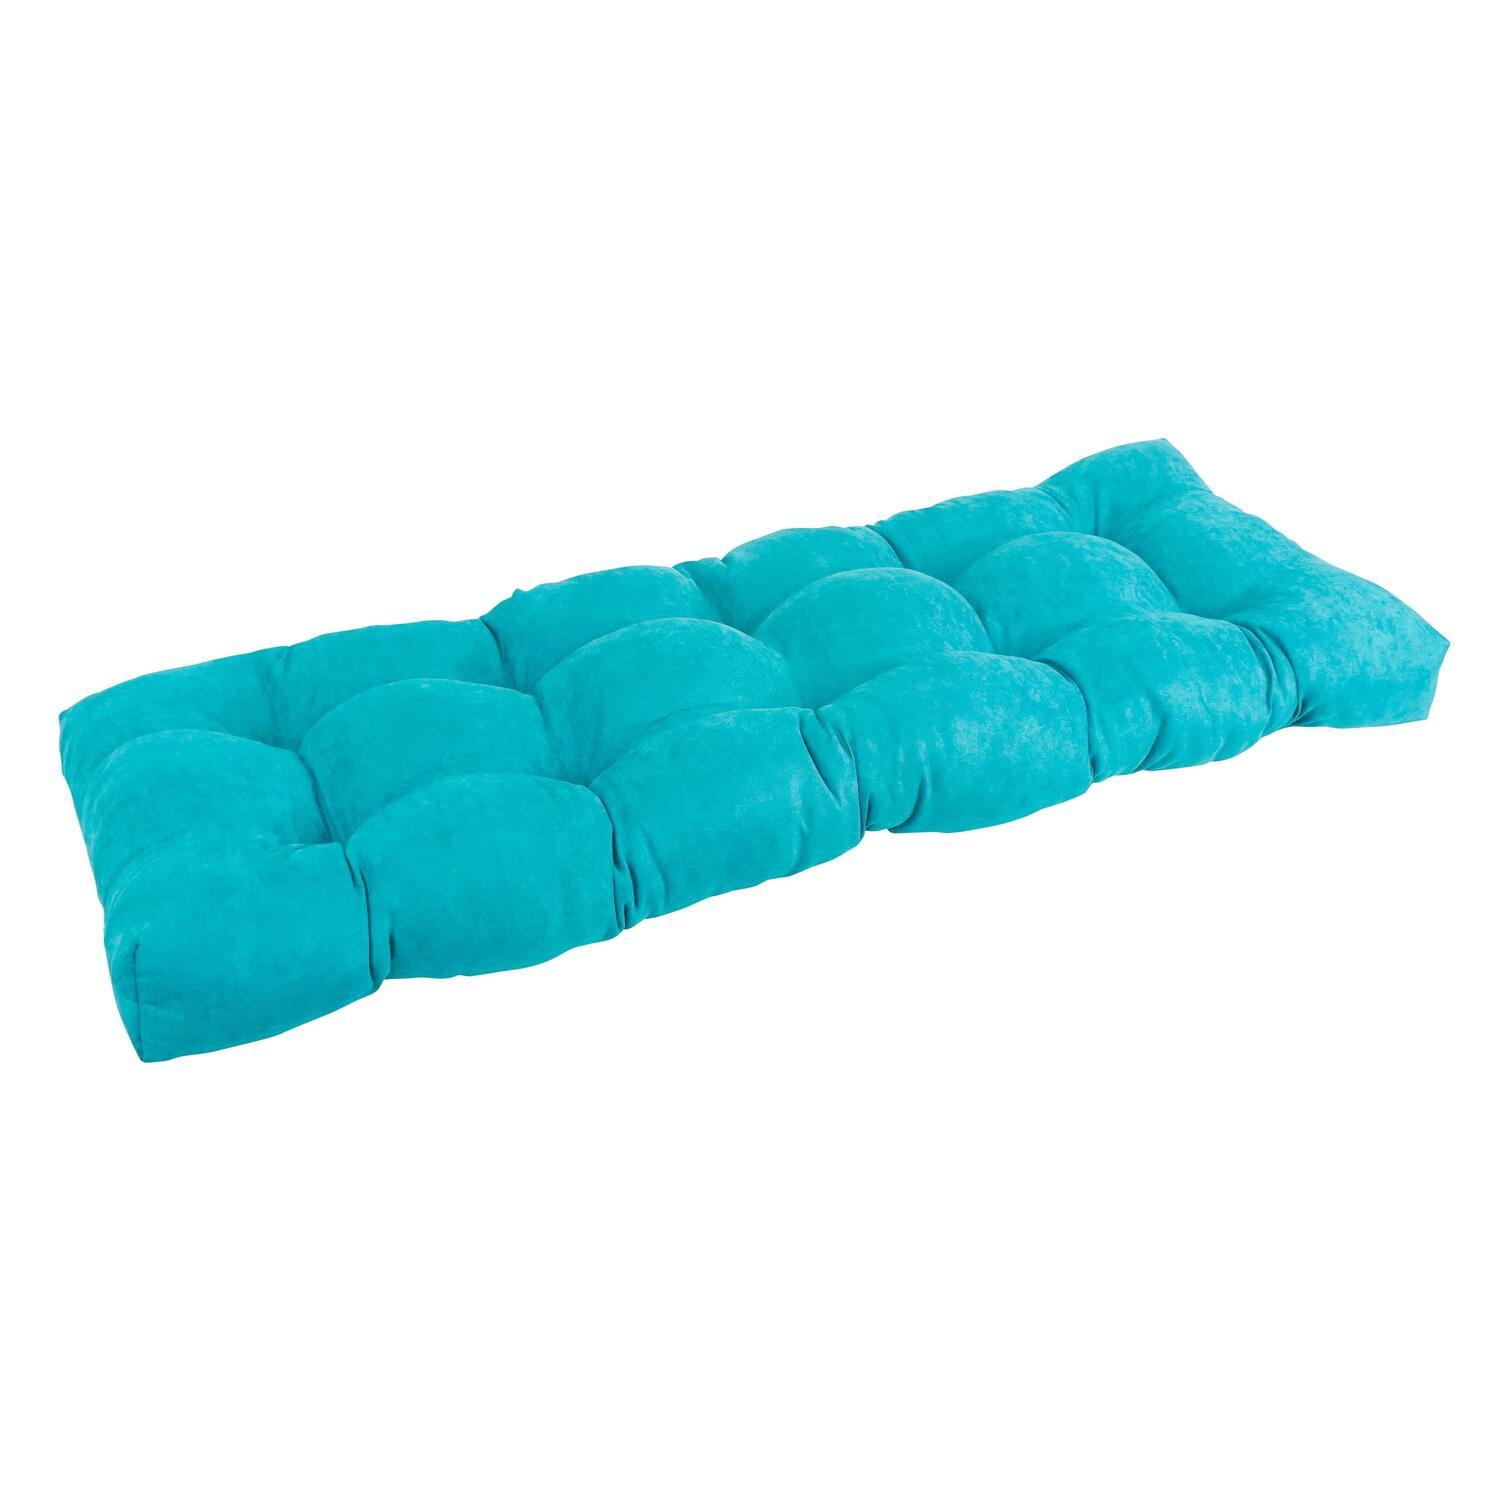 Aqua Blue Tufted Microsuede 46" Bench Cushion